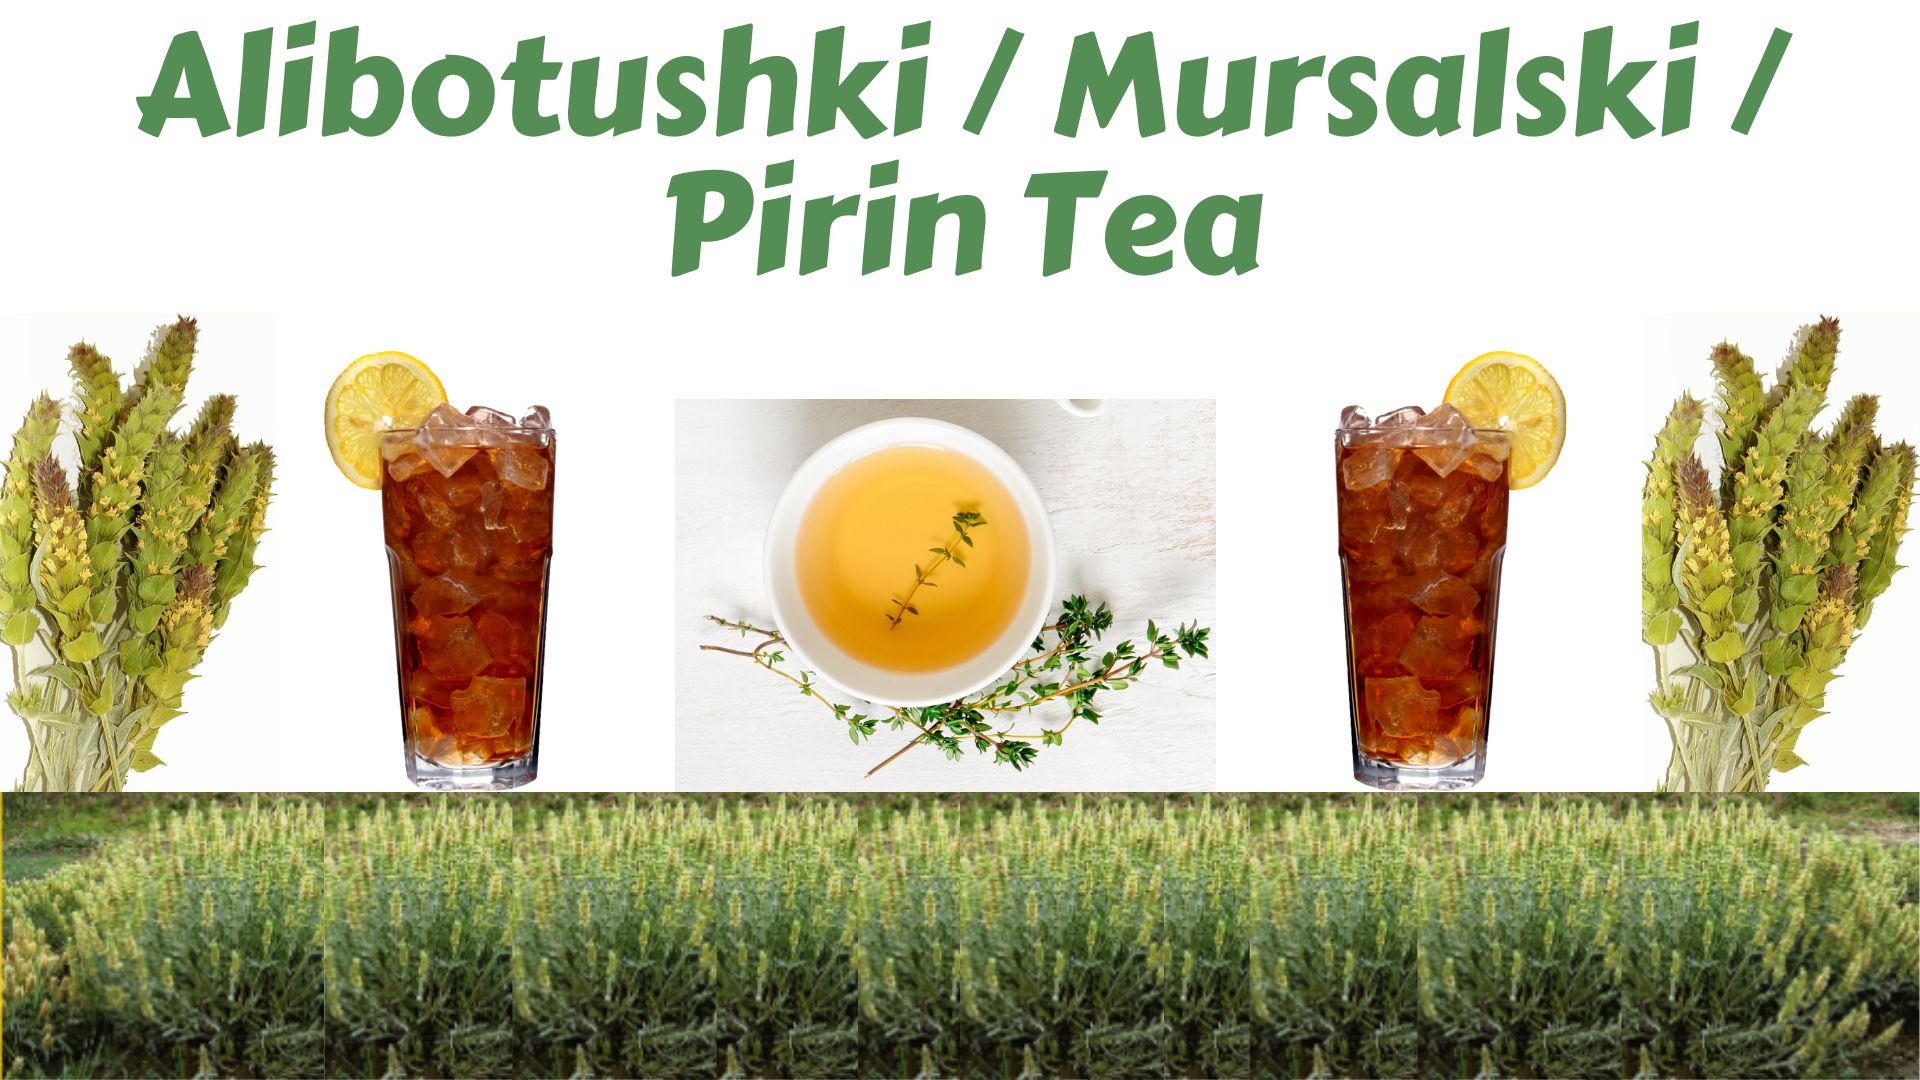 Alibotushki or Mursalski or Pirin Tea